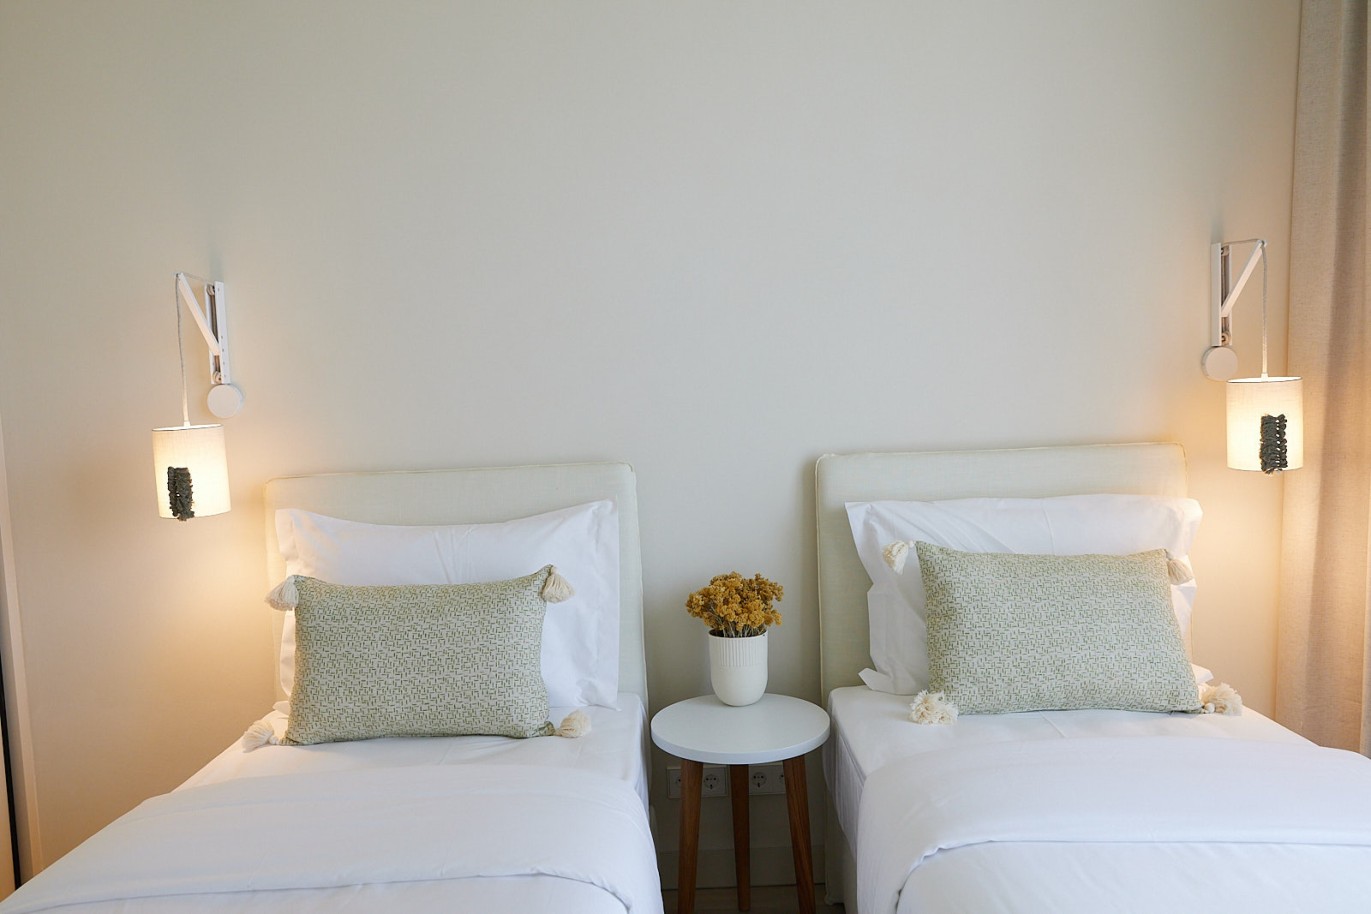 2 bedroom apartment in resort, for sale in Porches, Algarve_229218